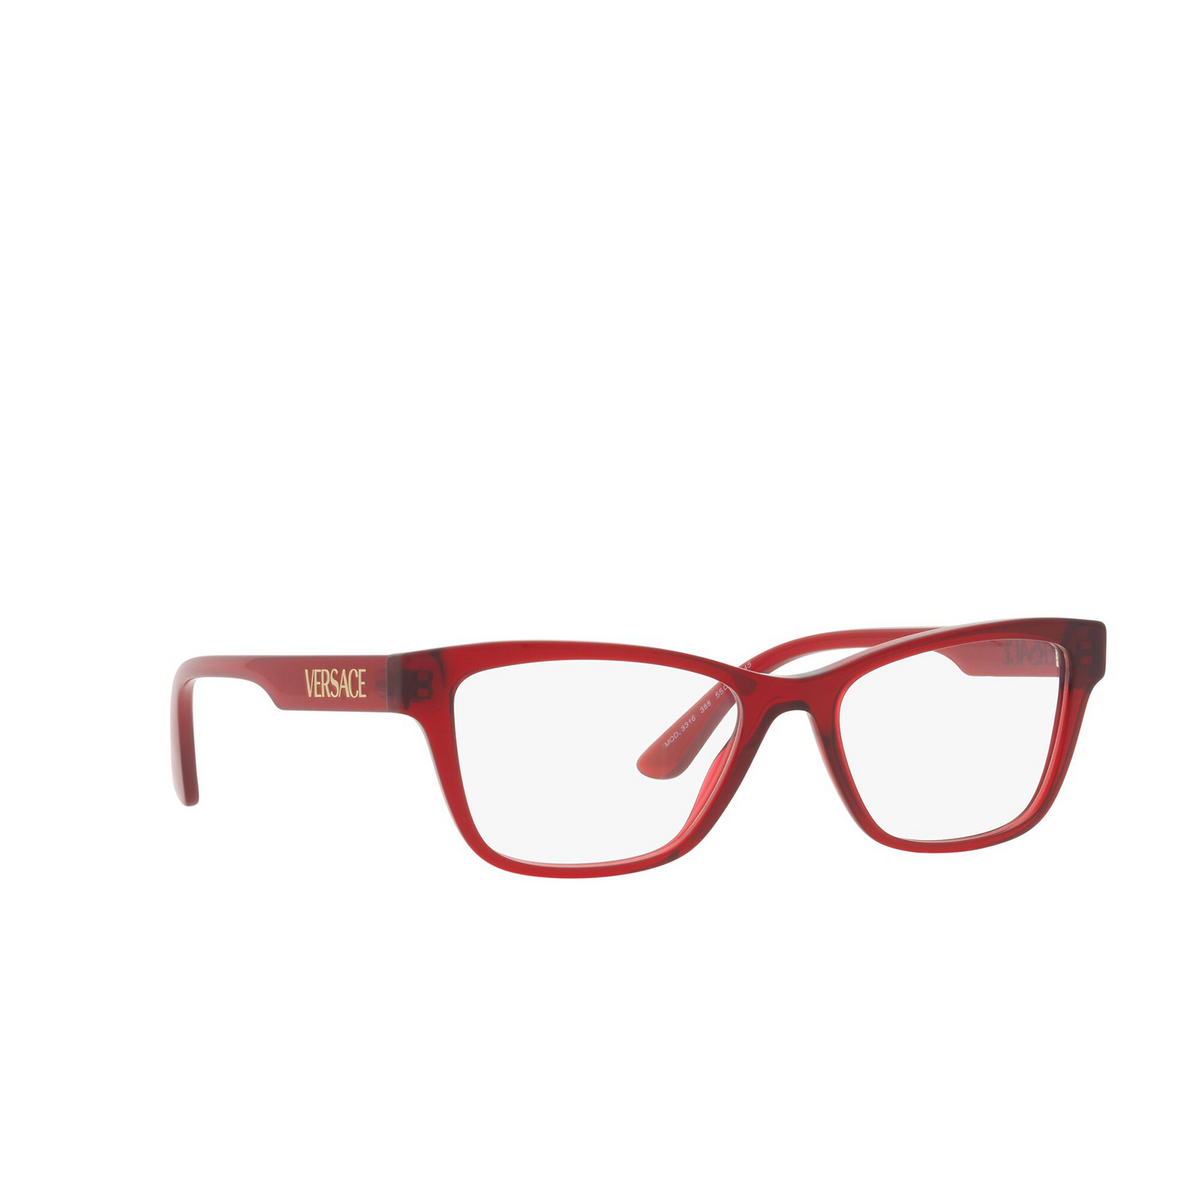 Versace® Square Eyeglasses: VE3316 color Transparent Red 388 - three-quarters view.